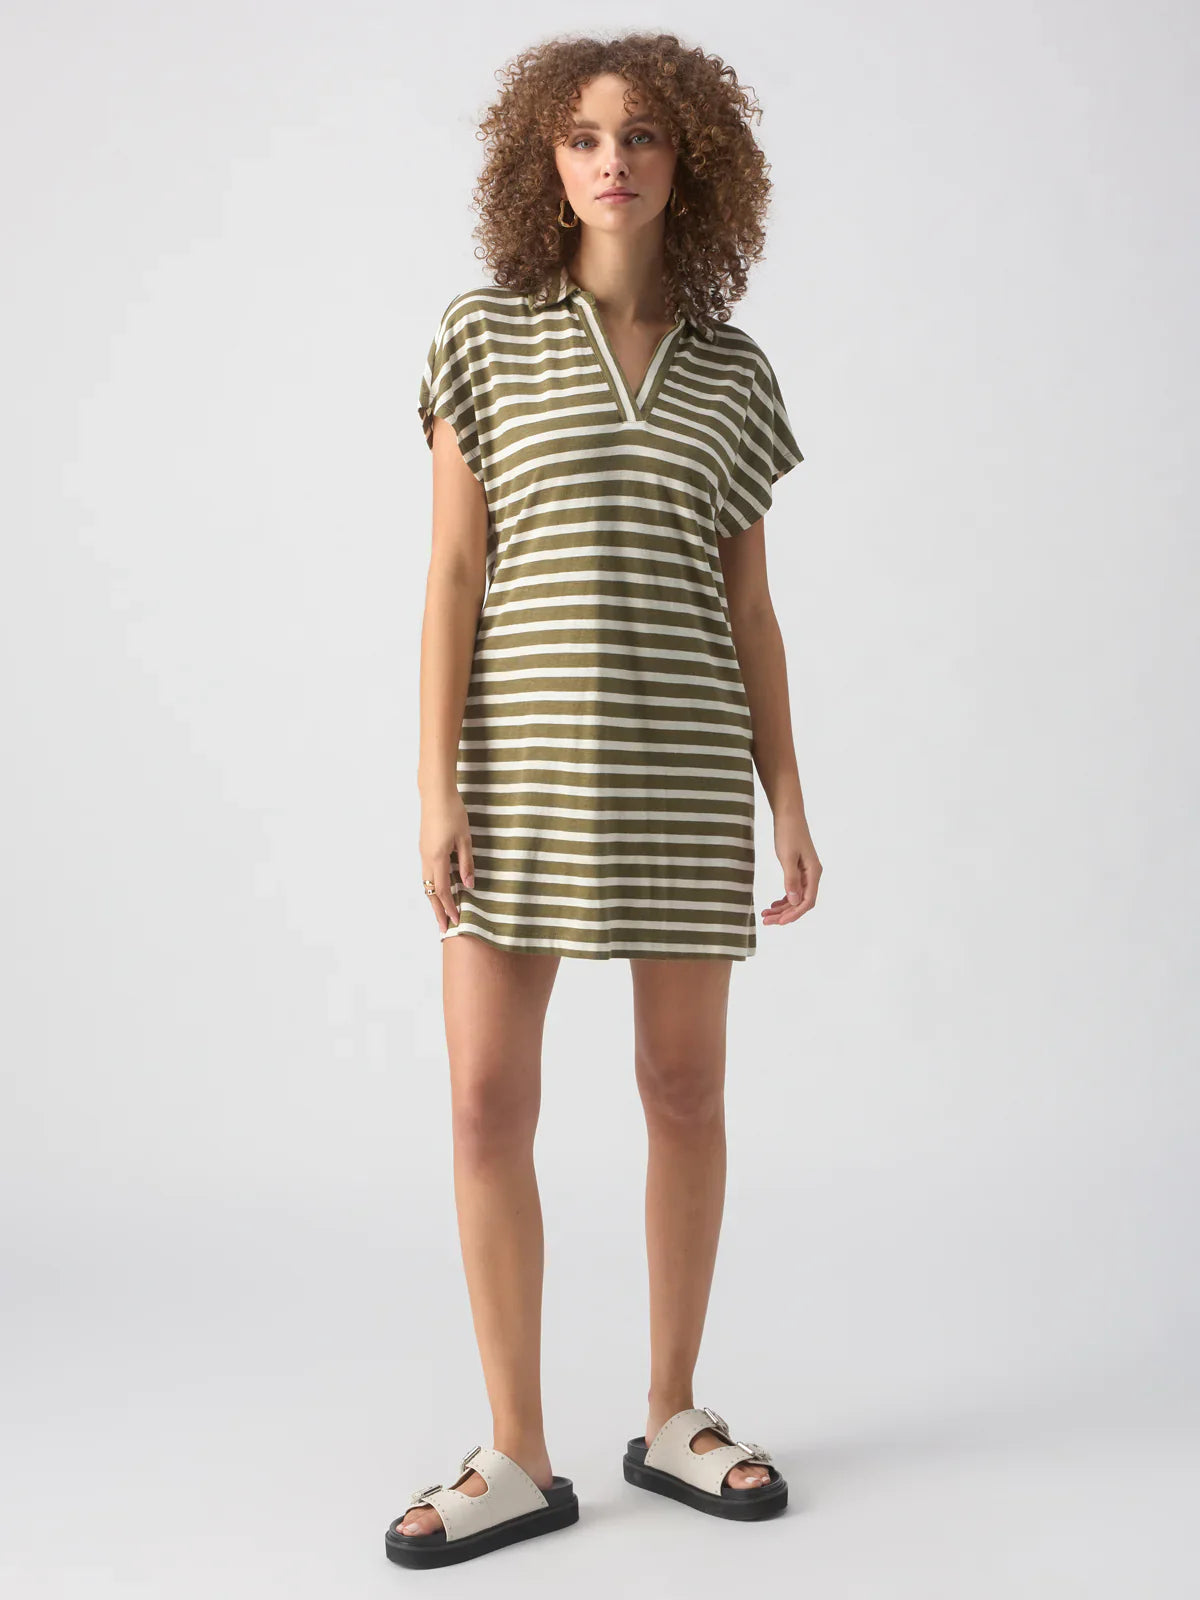 Johnny Collar T-shirt Dress - Light Ecru Olive Stripe